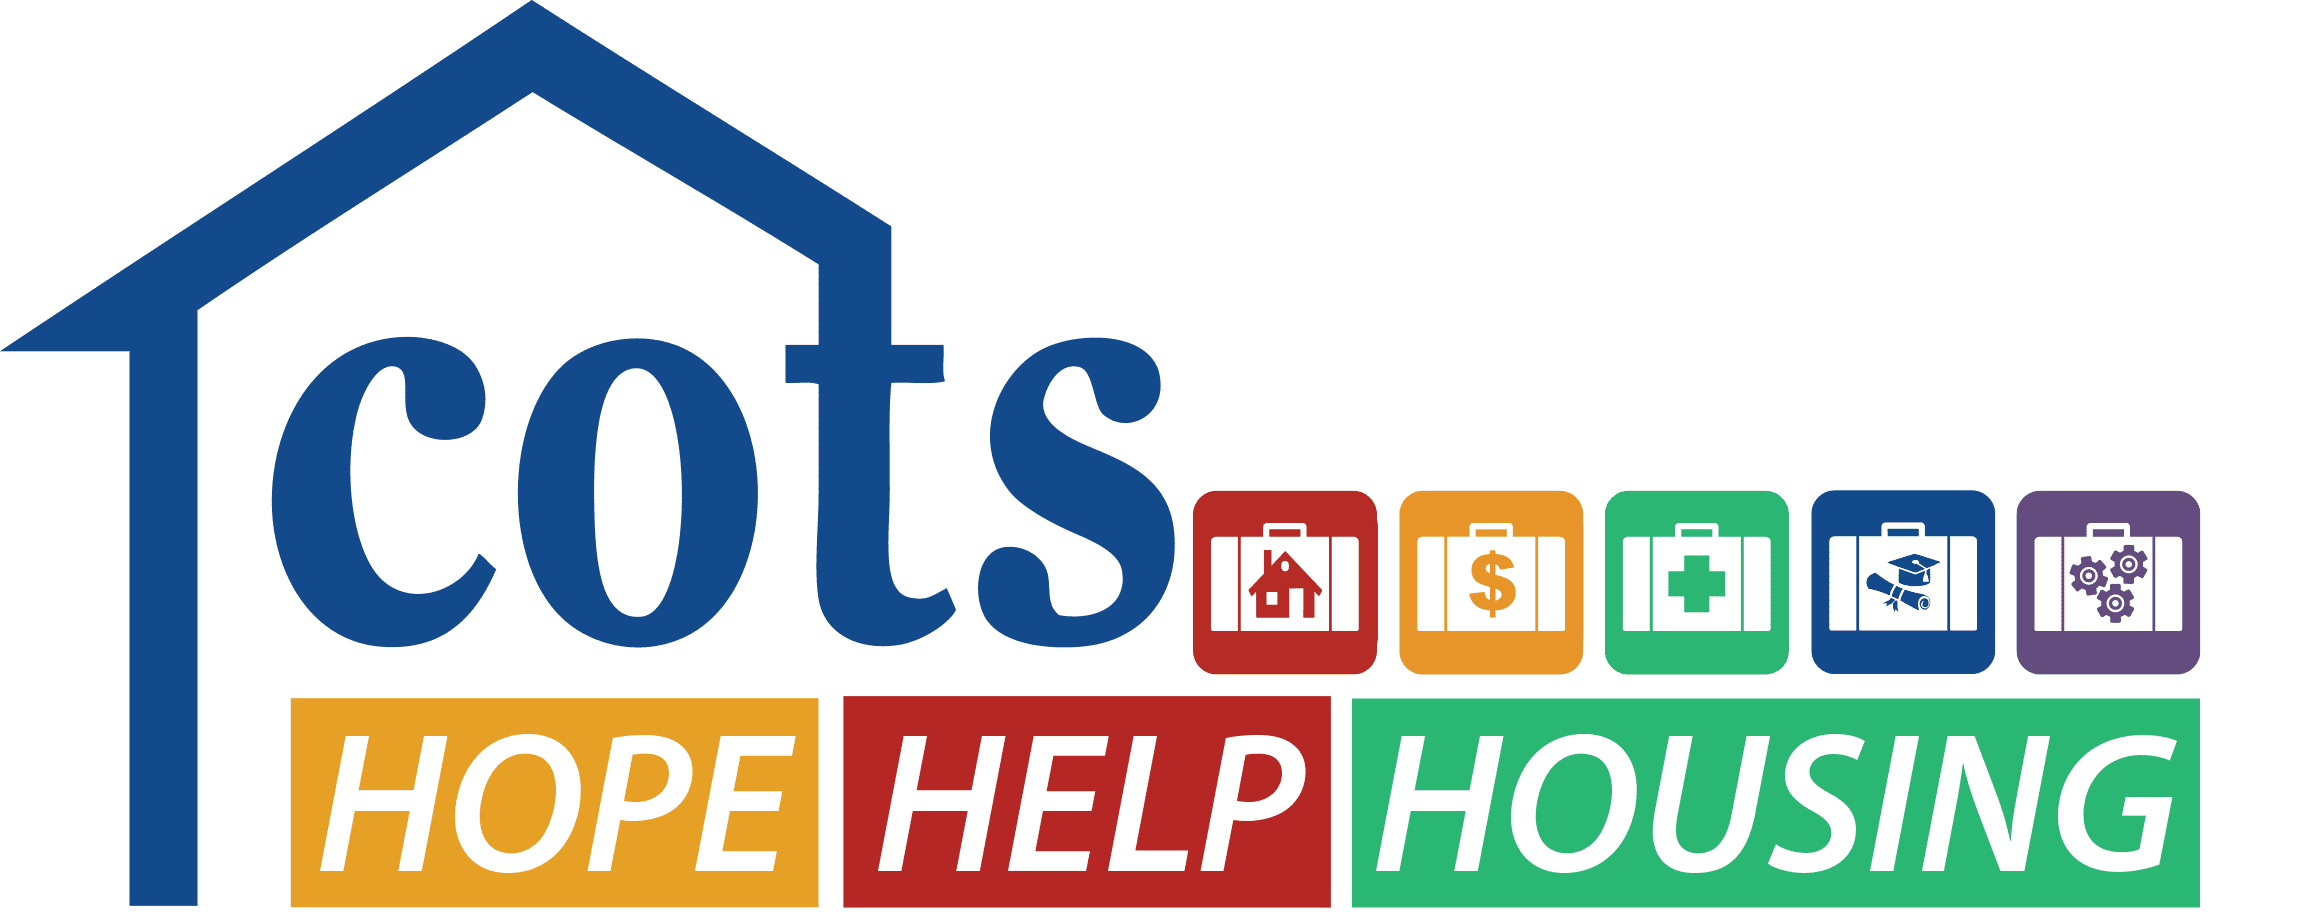 Cots Hope Help Housing